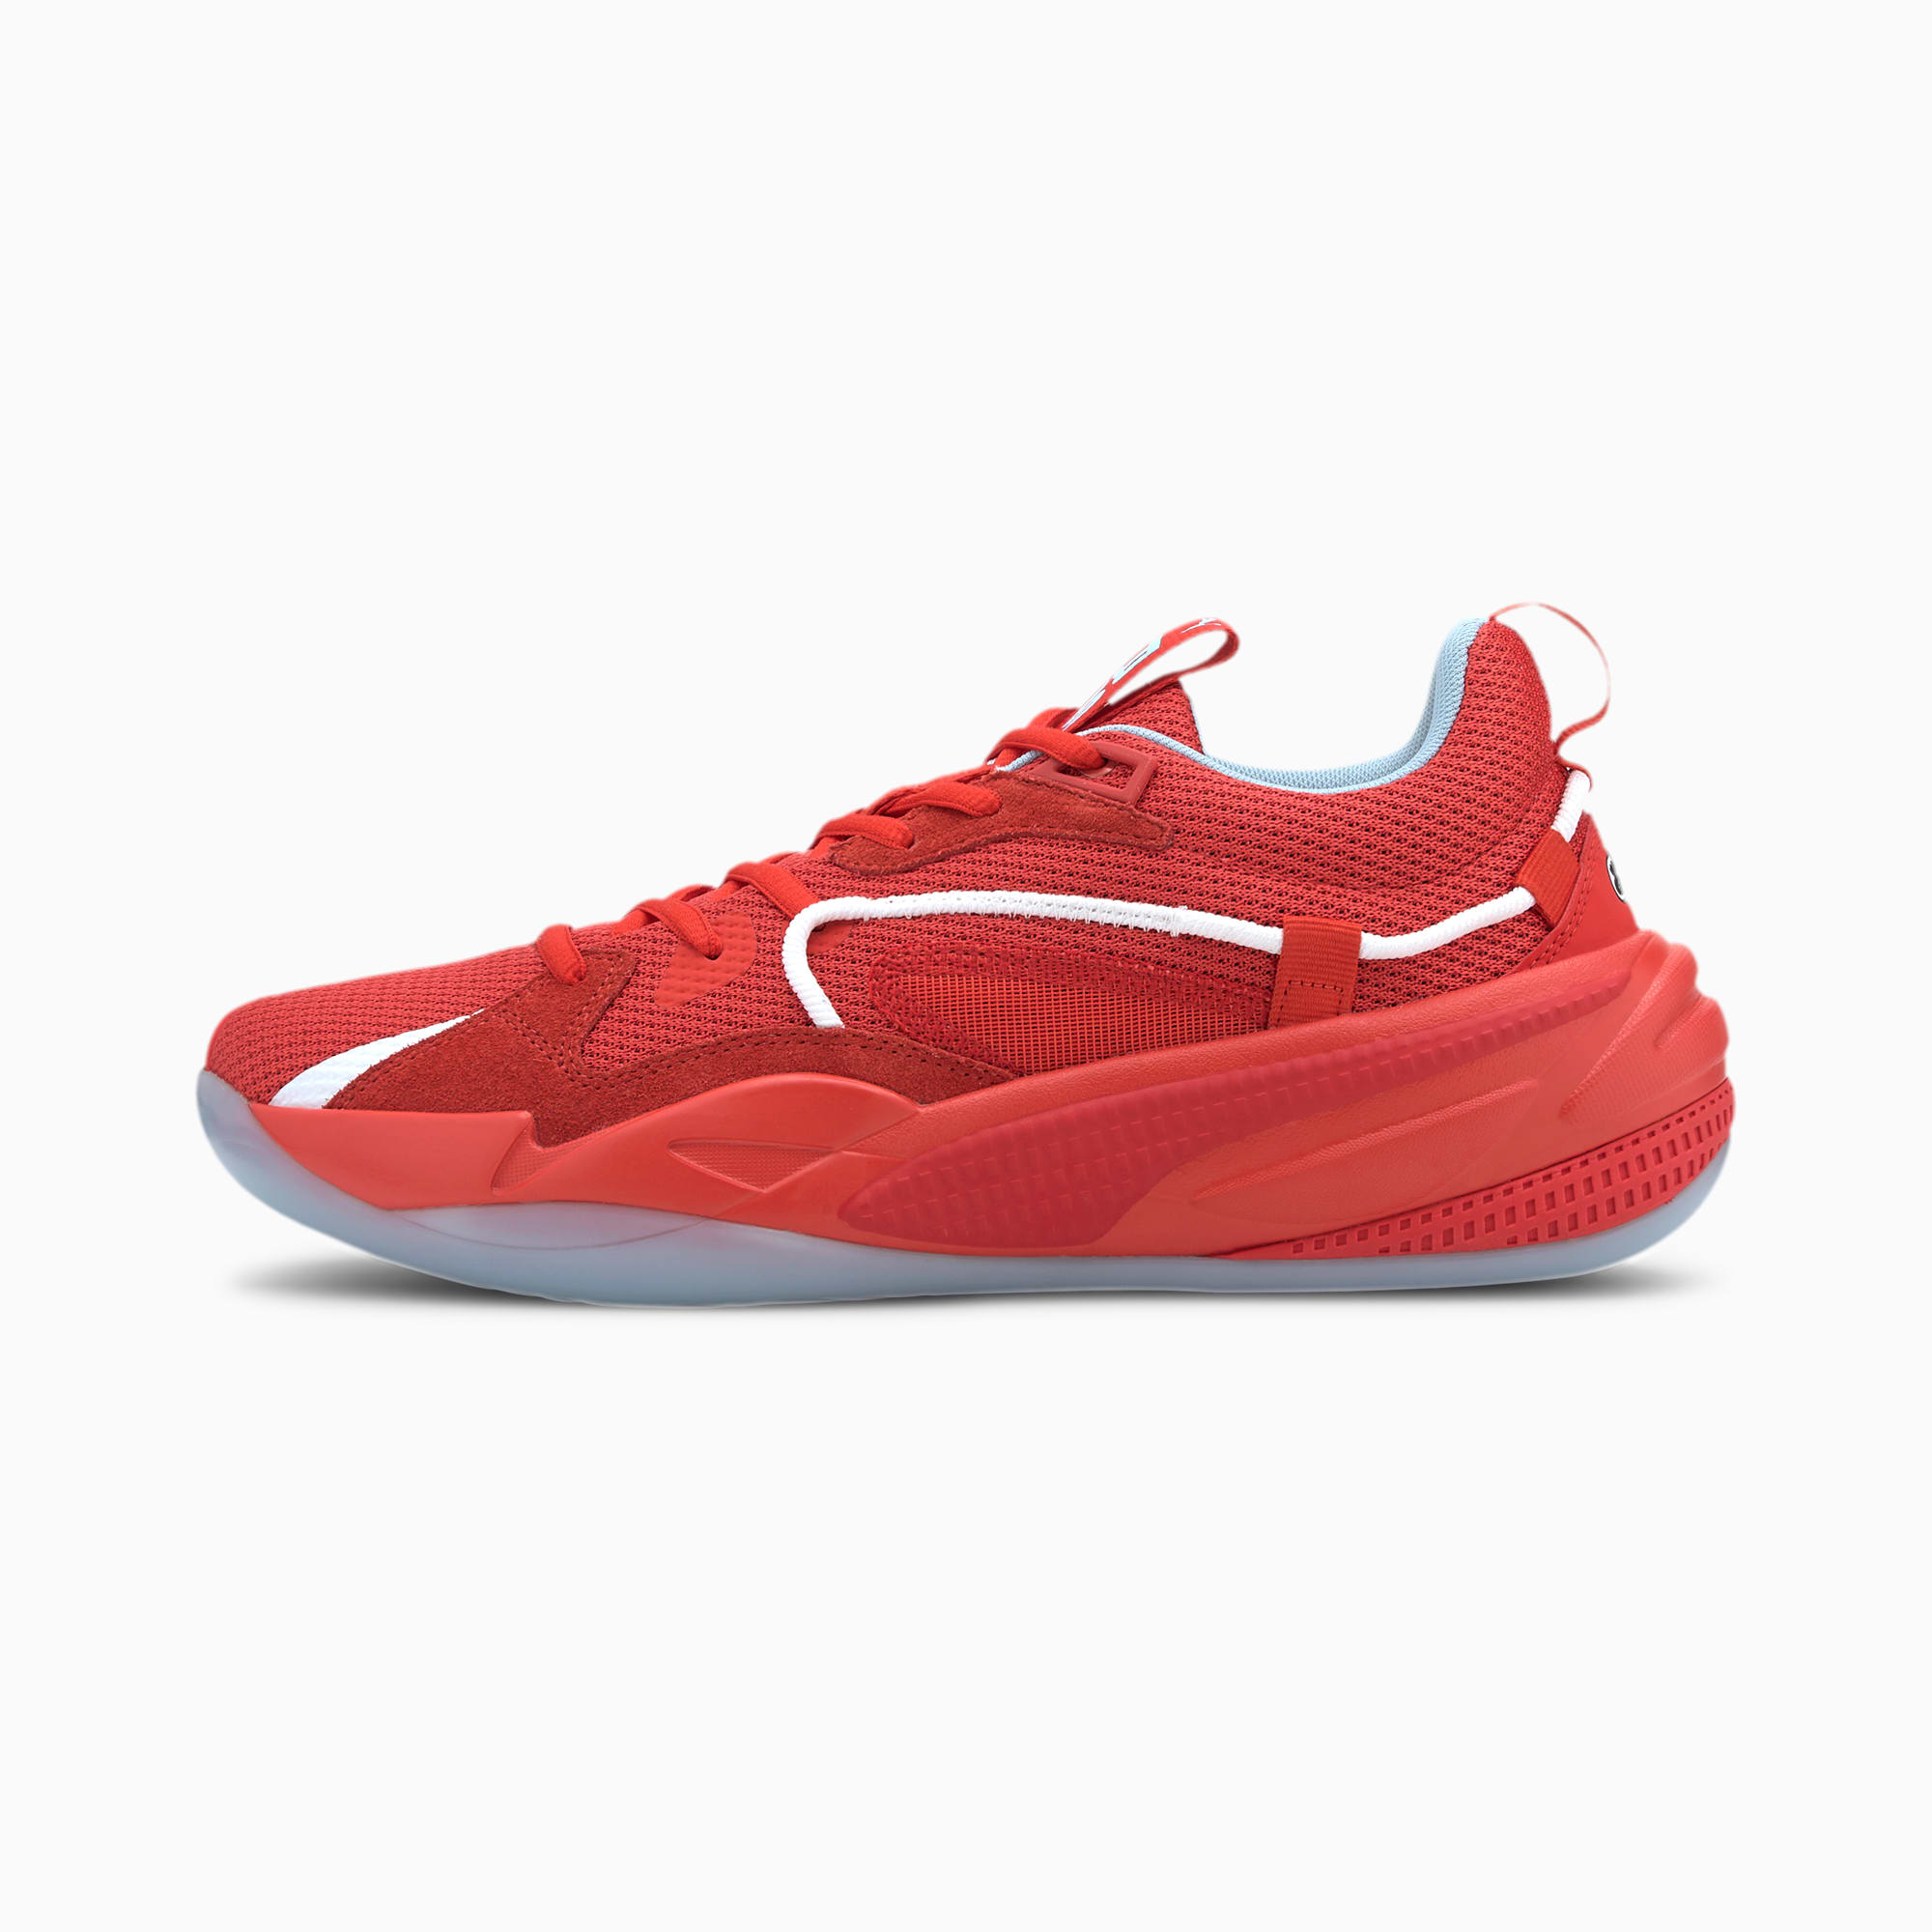 puma orange basketball shoes OFF 60%